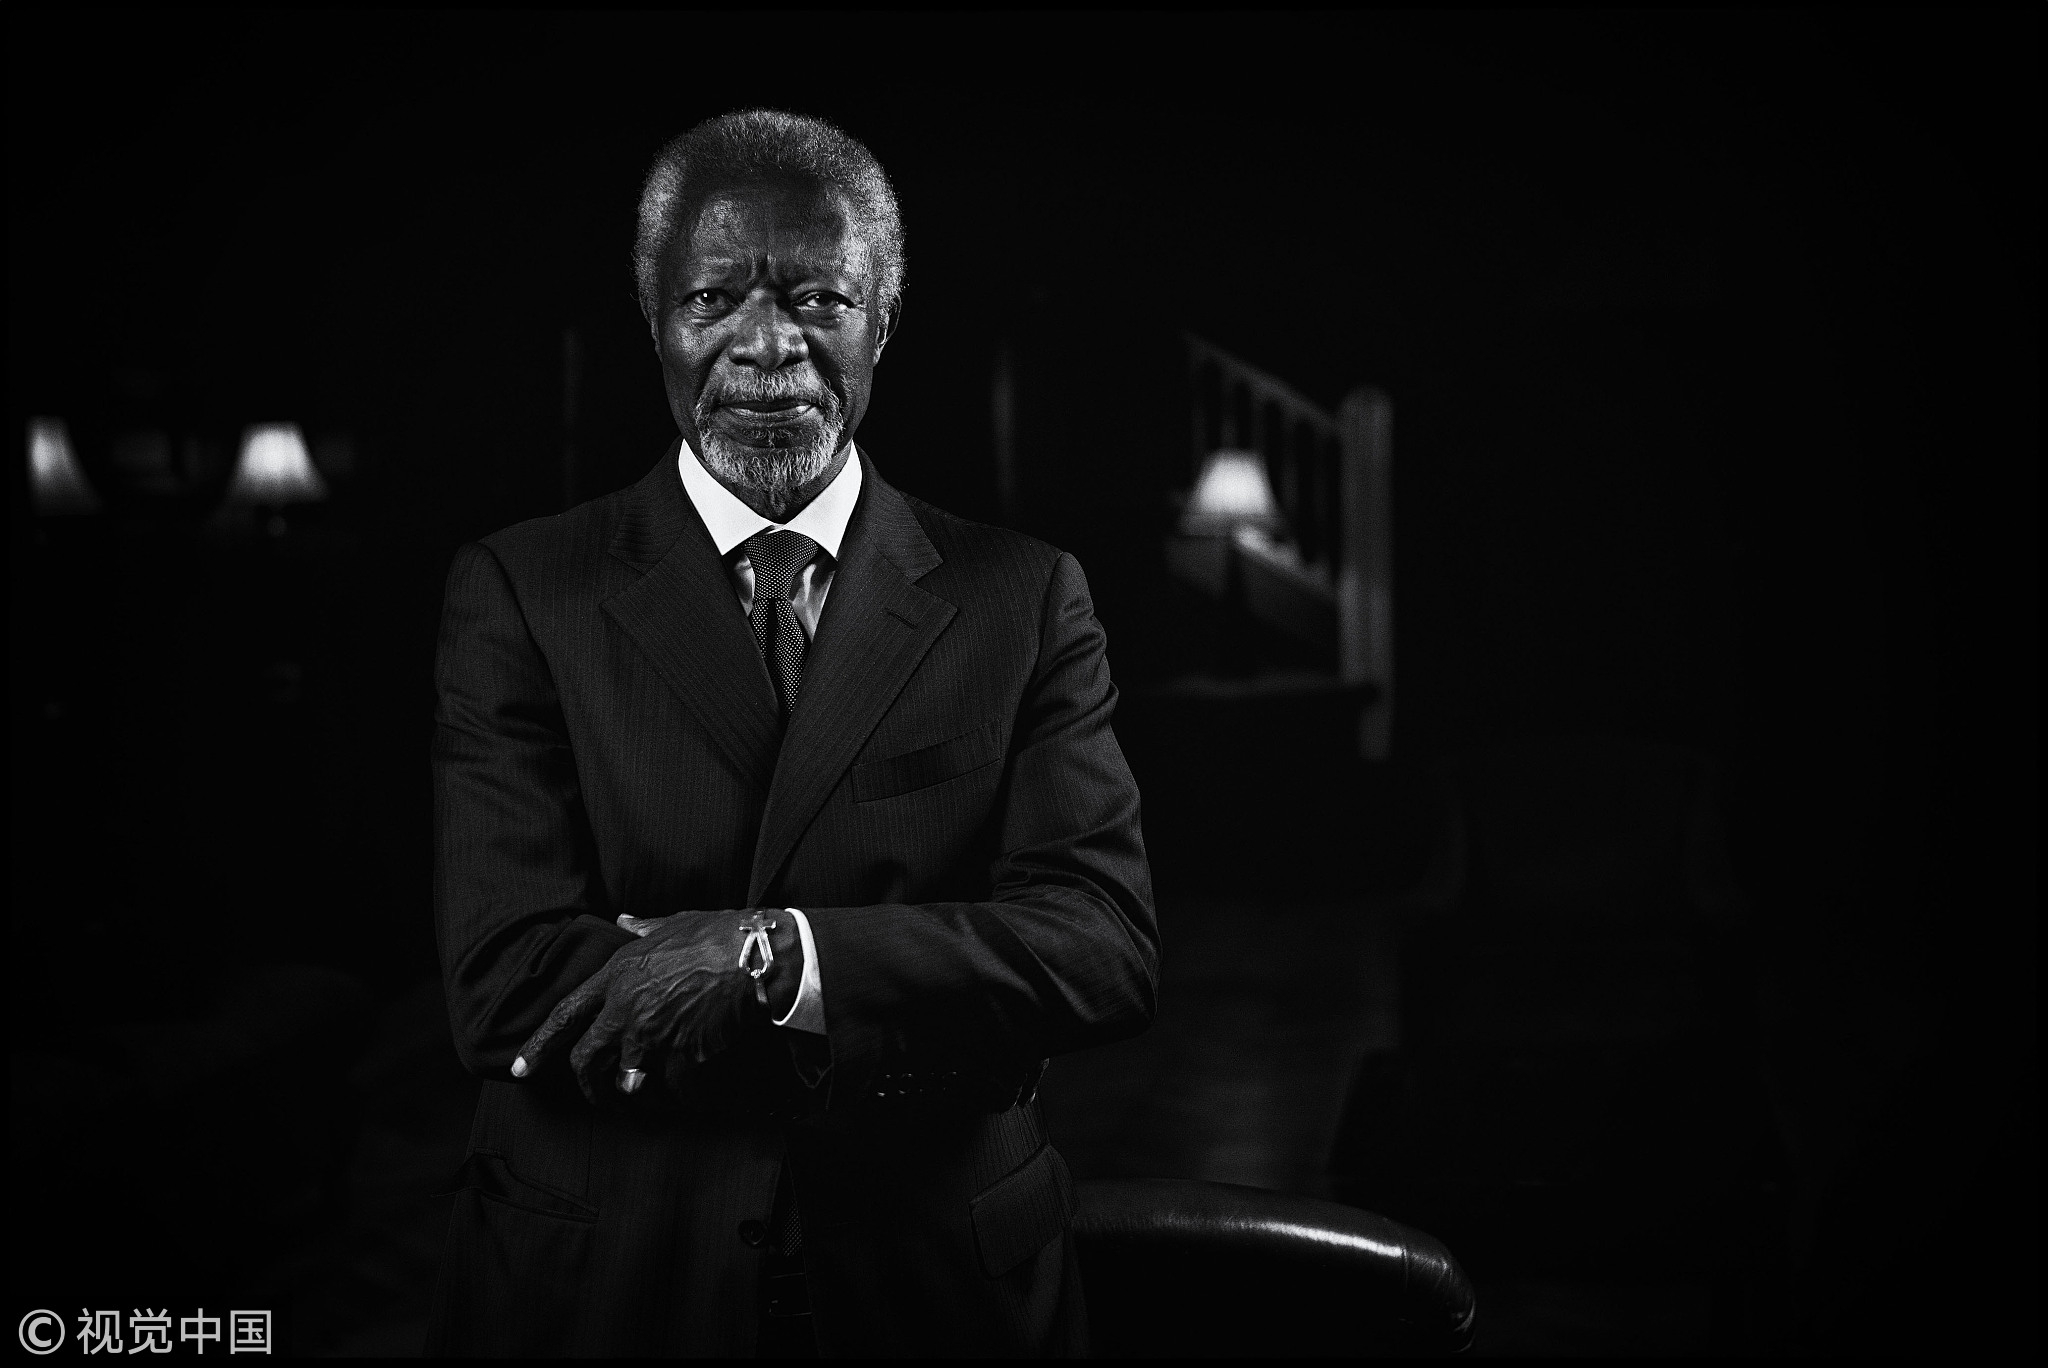 UN holds memorial service for late Secretary-General Annan - CGTN